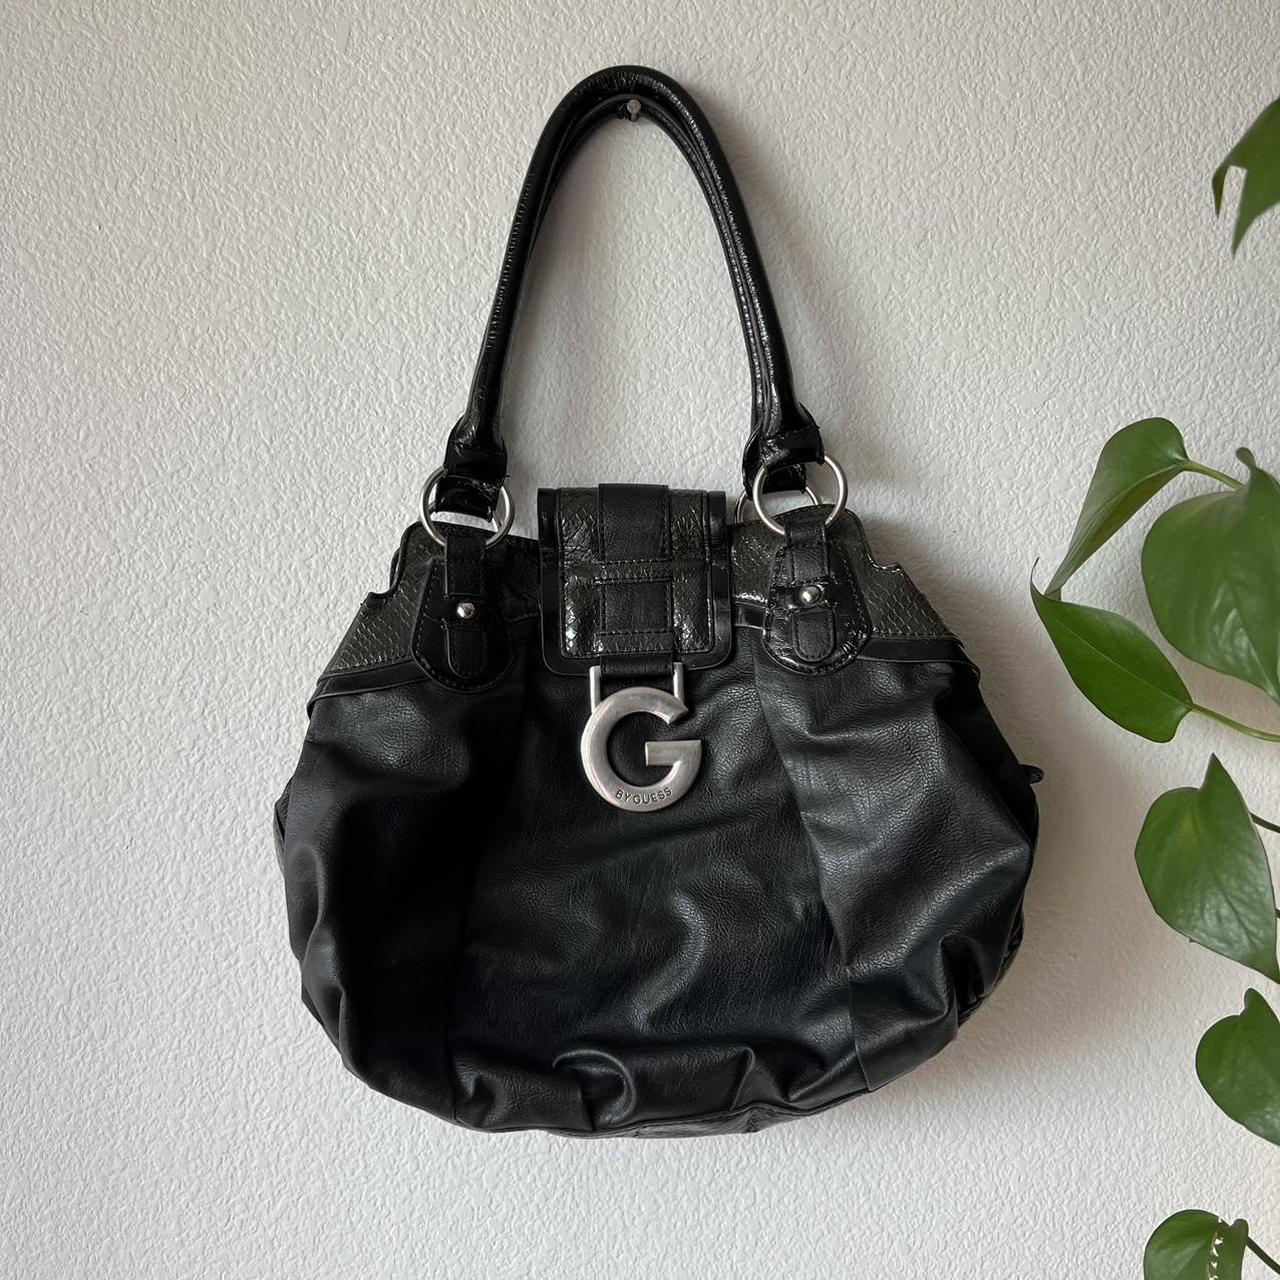 GUESS Noelle Top Zip Shoulder Bag, Black: Handbags: Amazon.com